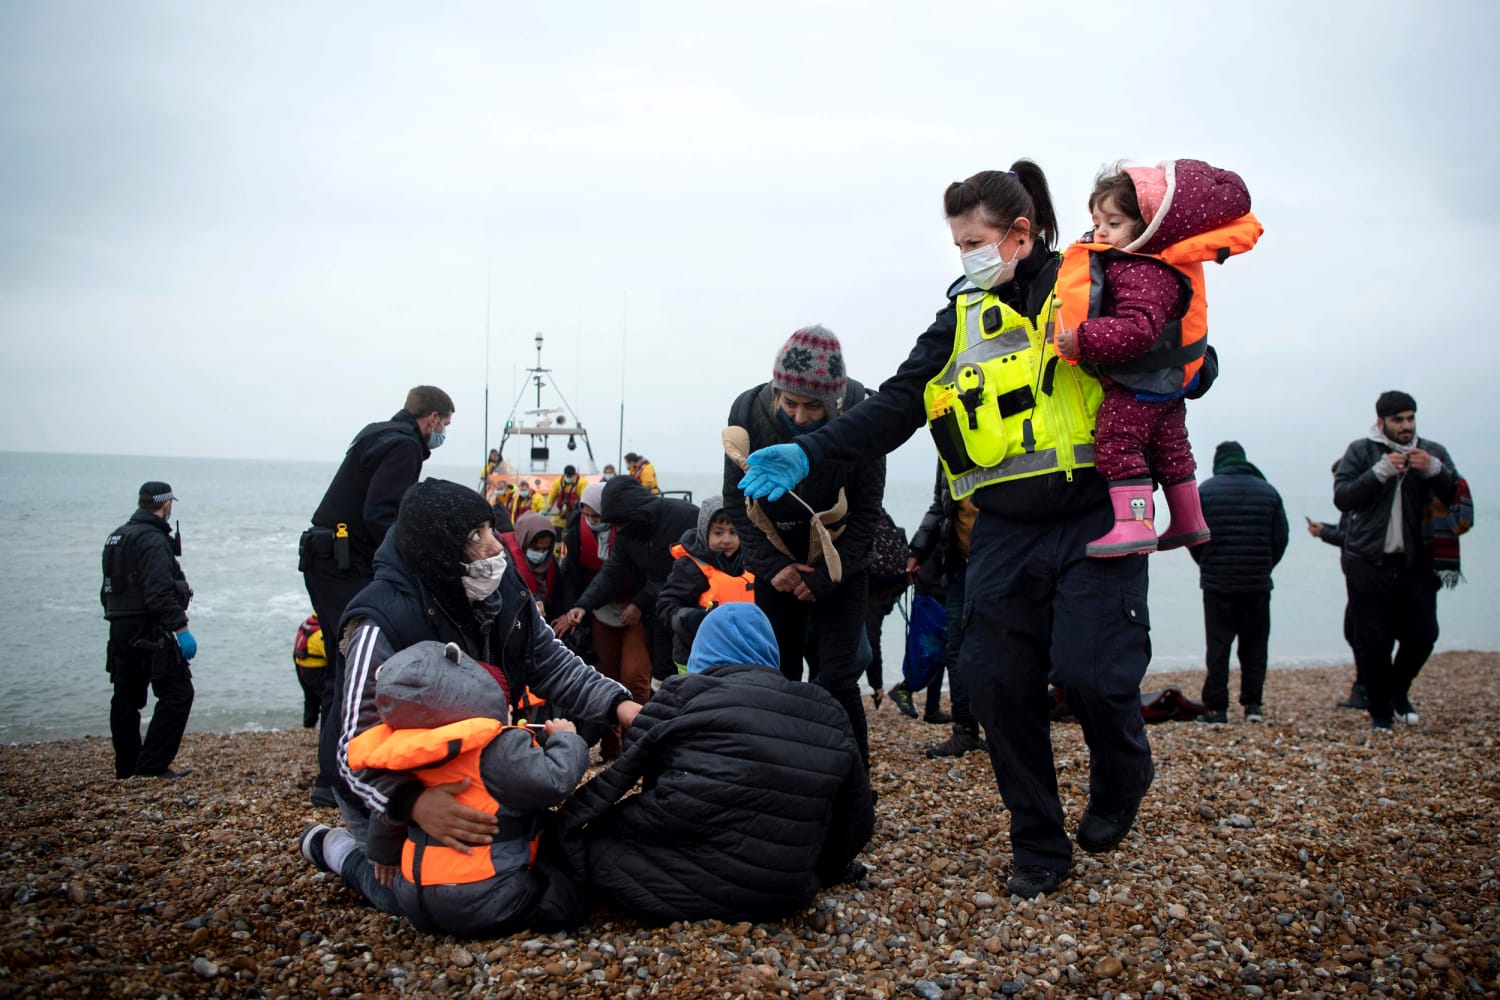 Tragedy on English Channel spotlights fierce debate over maritime border